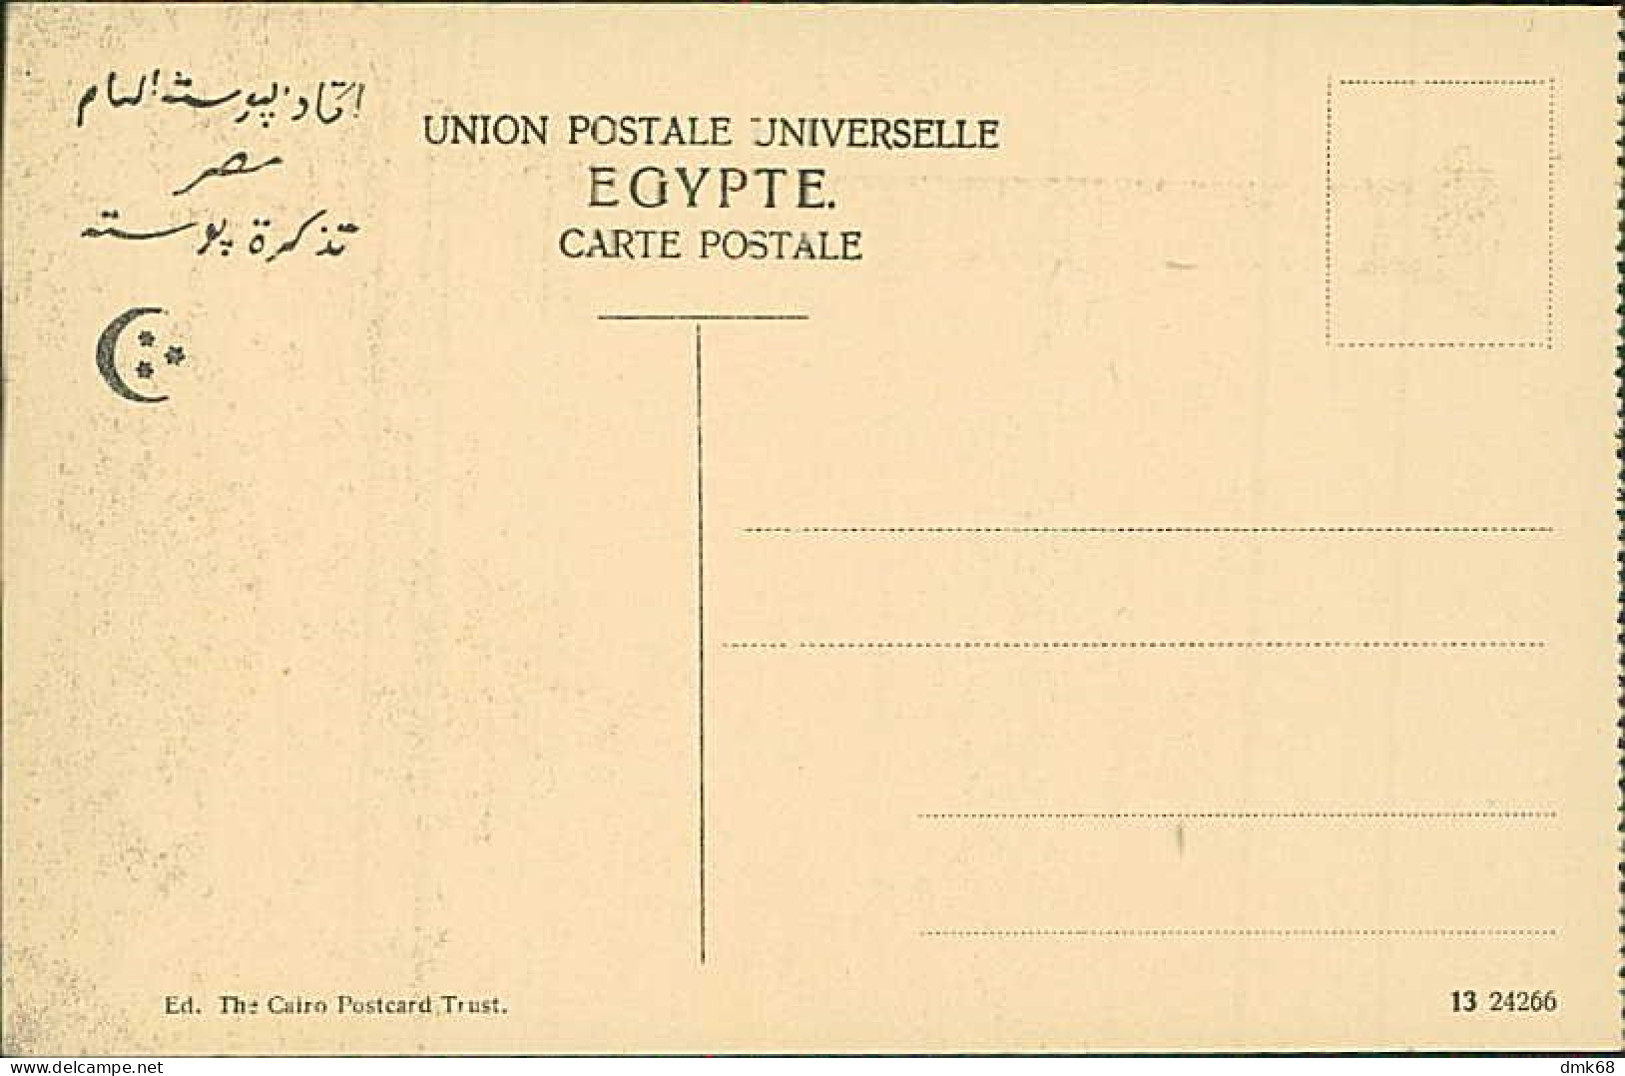 EGYPT - ALEXANDRIA / ALEXANDRIE - RUE ATTARINE - EDIT THE CAIRO POSTCARD TRUST - 1910s (12609) - Alexandria